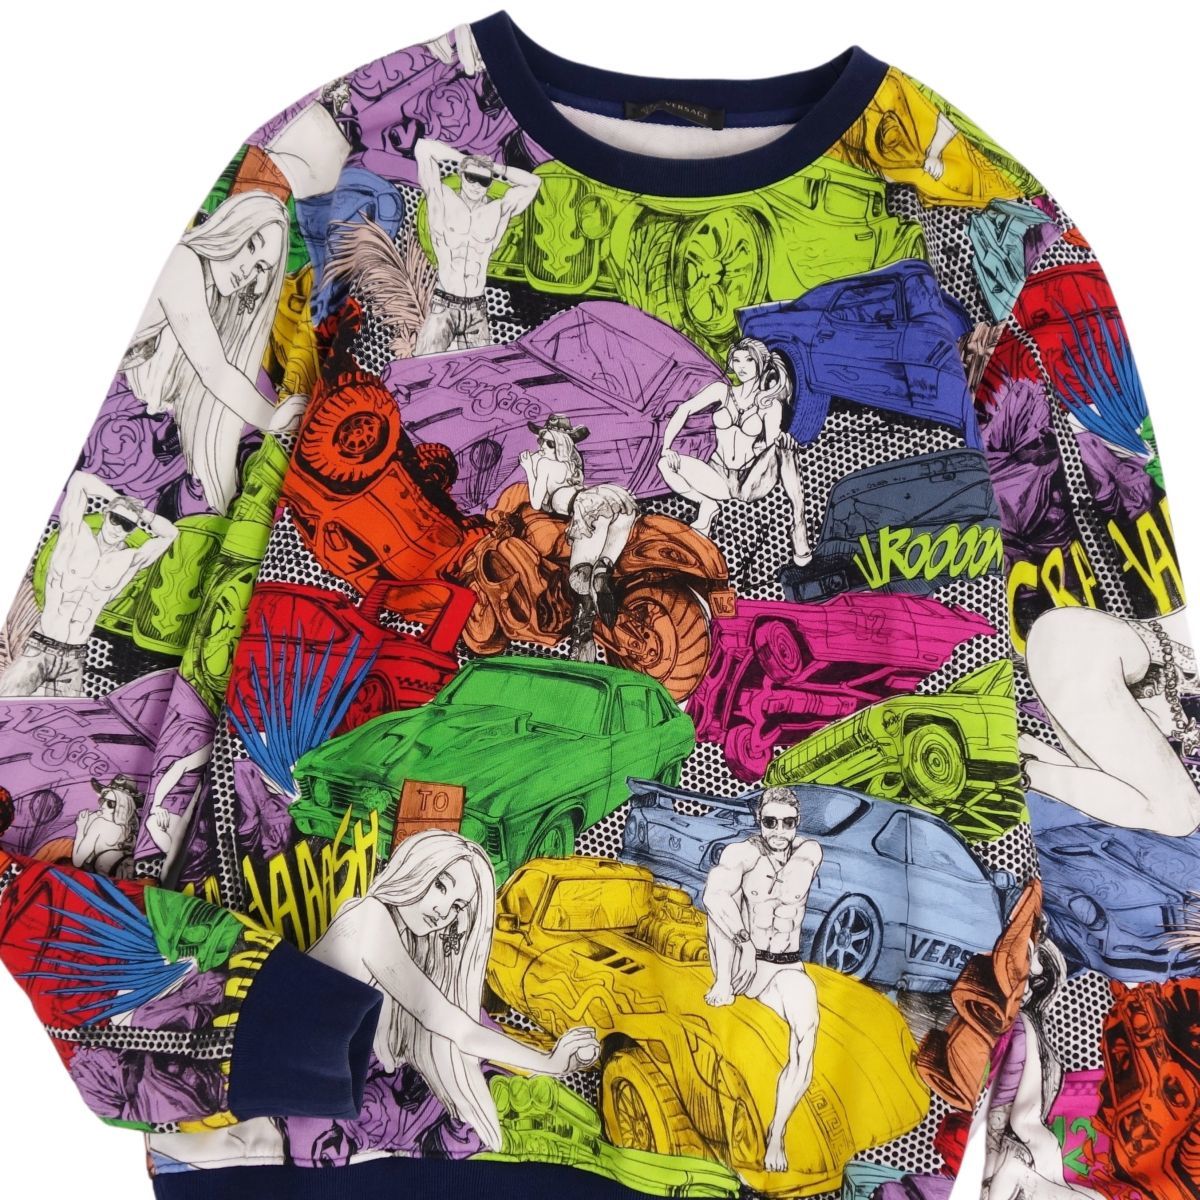  Versace VERSACE sweat sweatshirt long sleeve total pattern cotton tops men's S multicolor cg10ml-rm08f06464